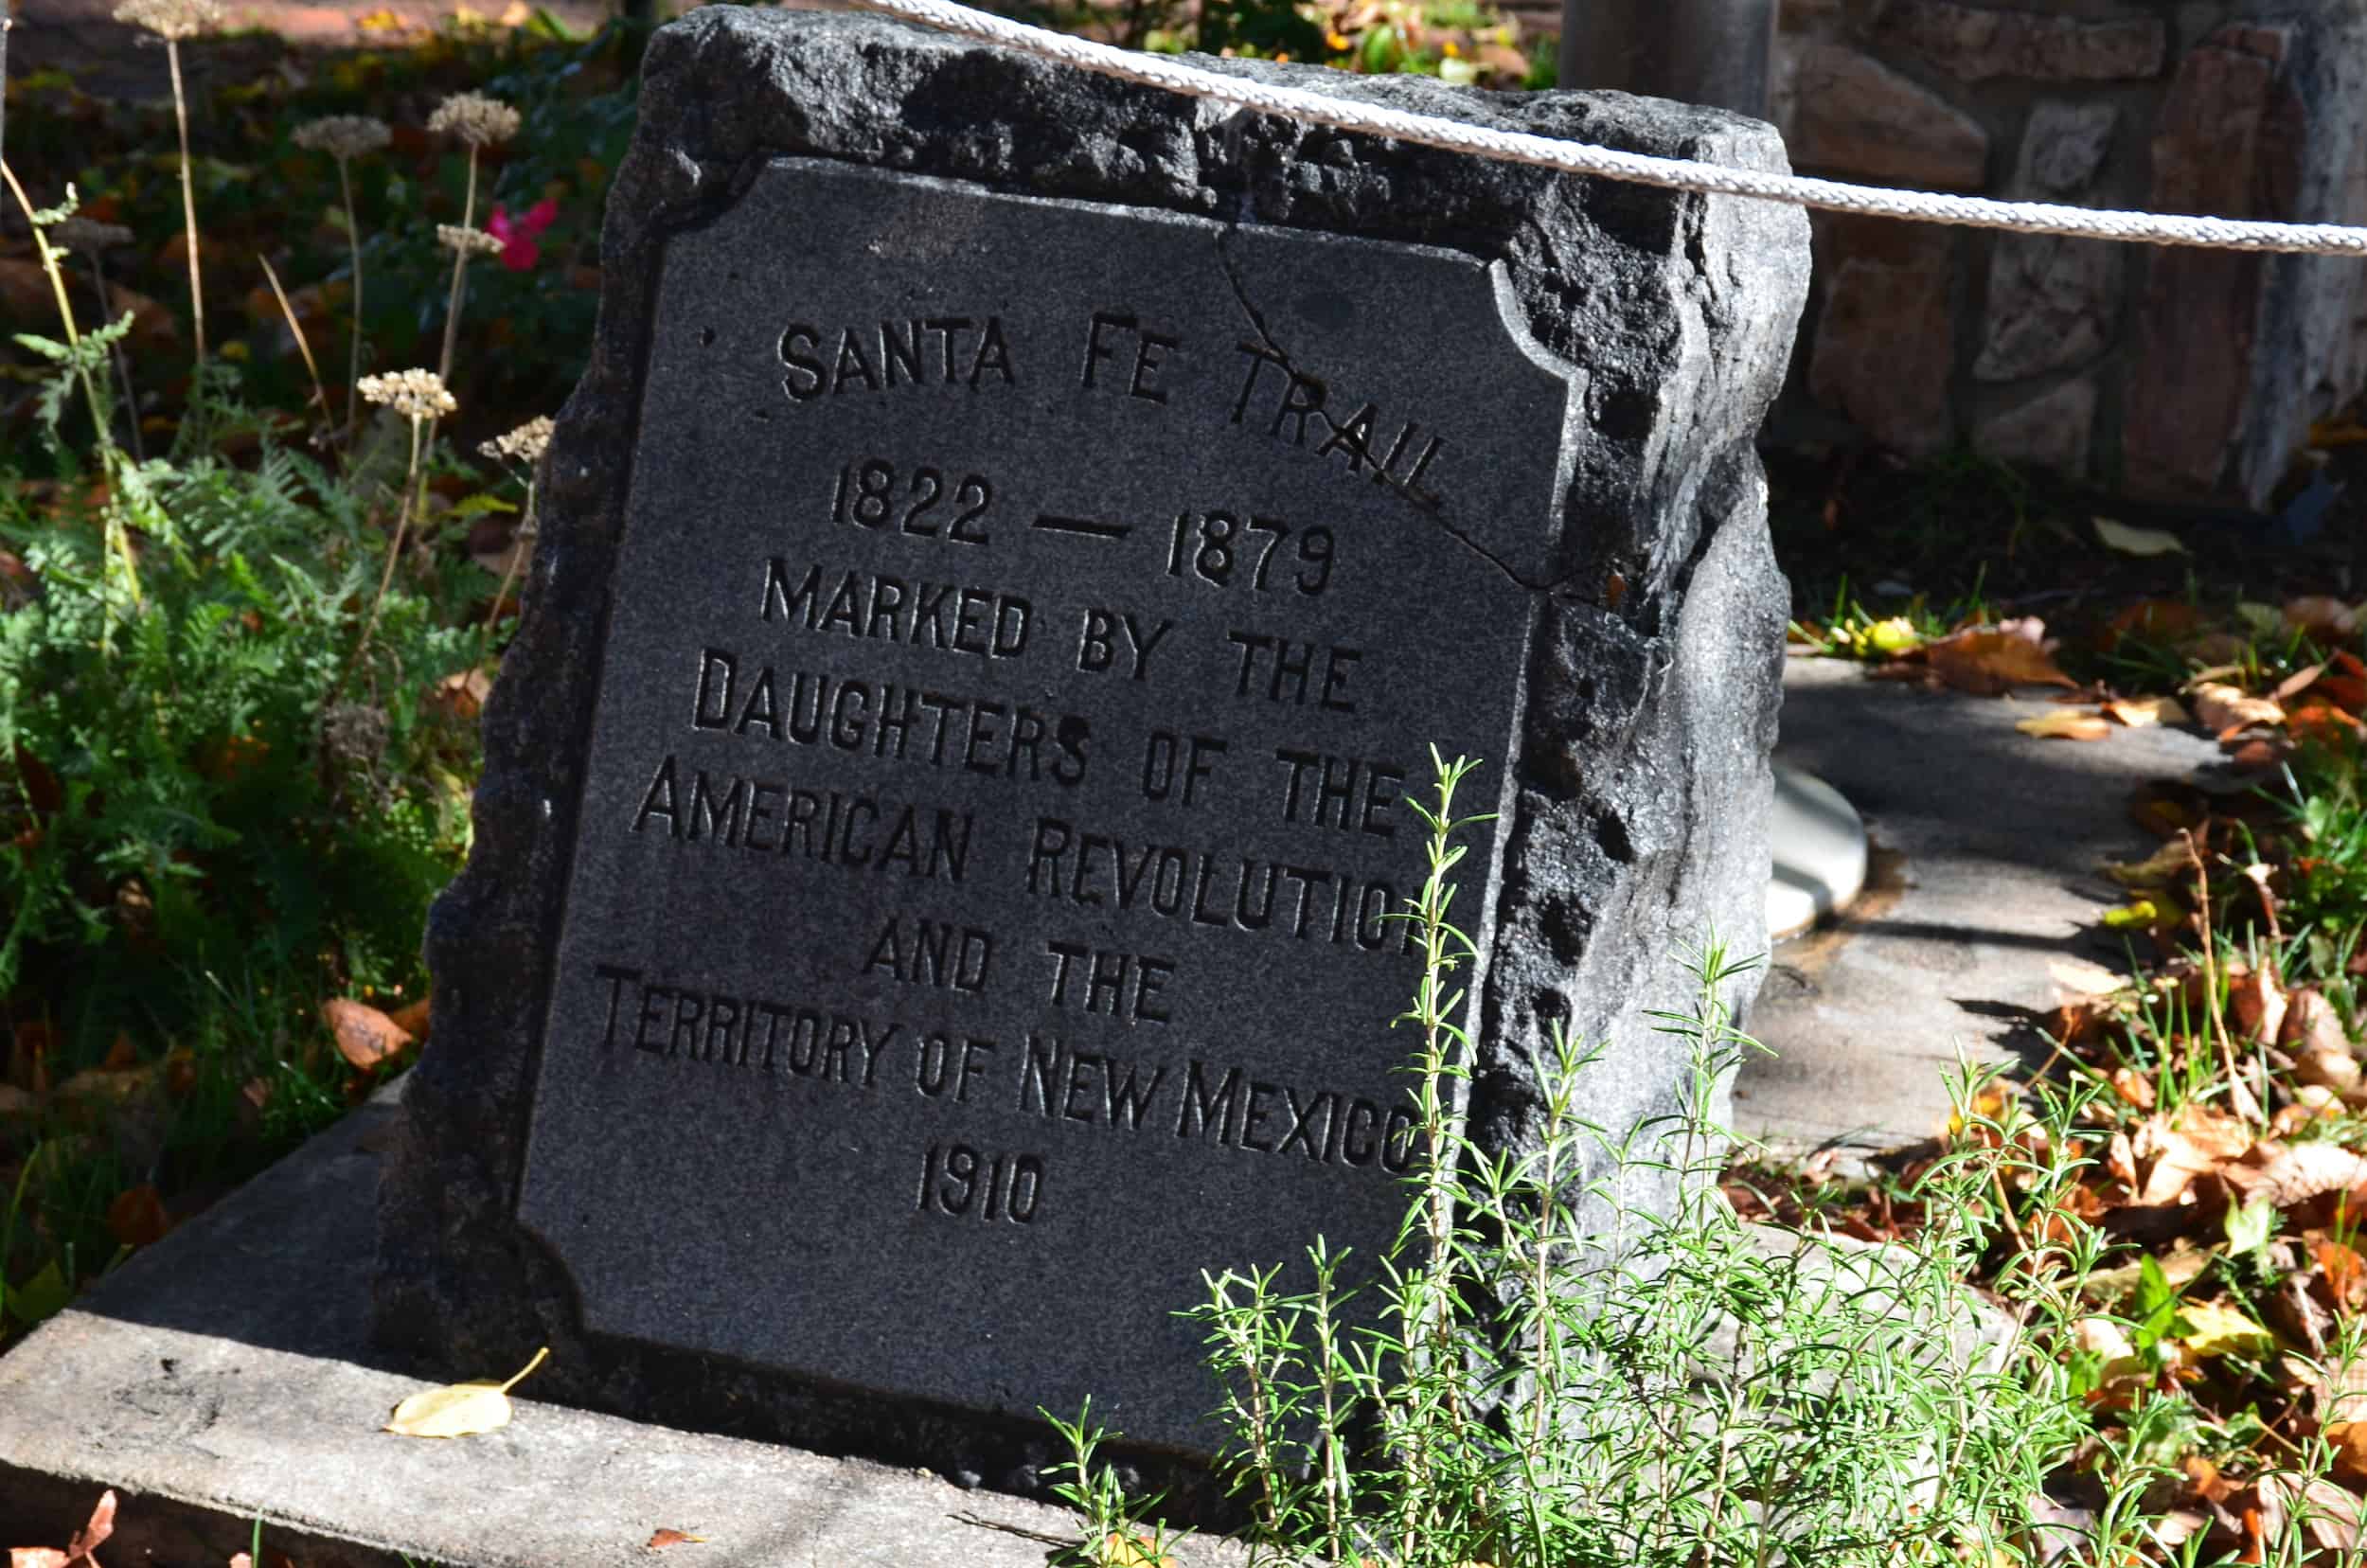 Santa Fe Trail plaque in Las Vegas, New Mexico